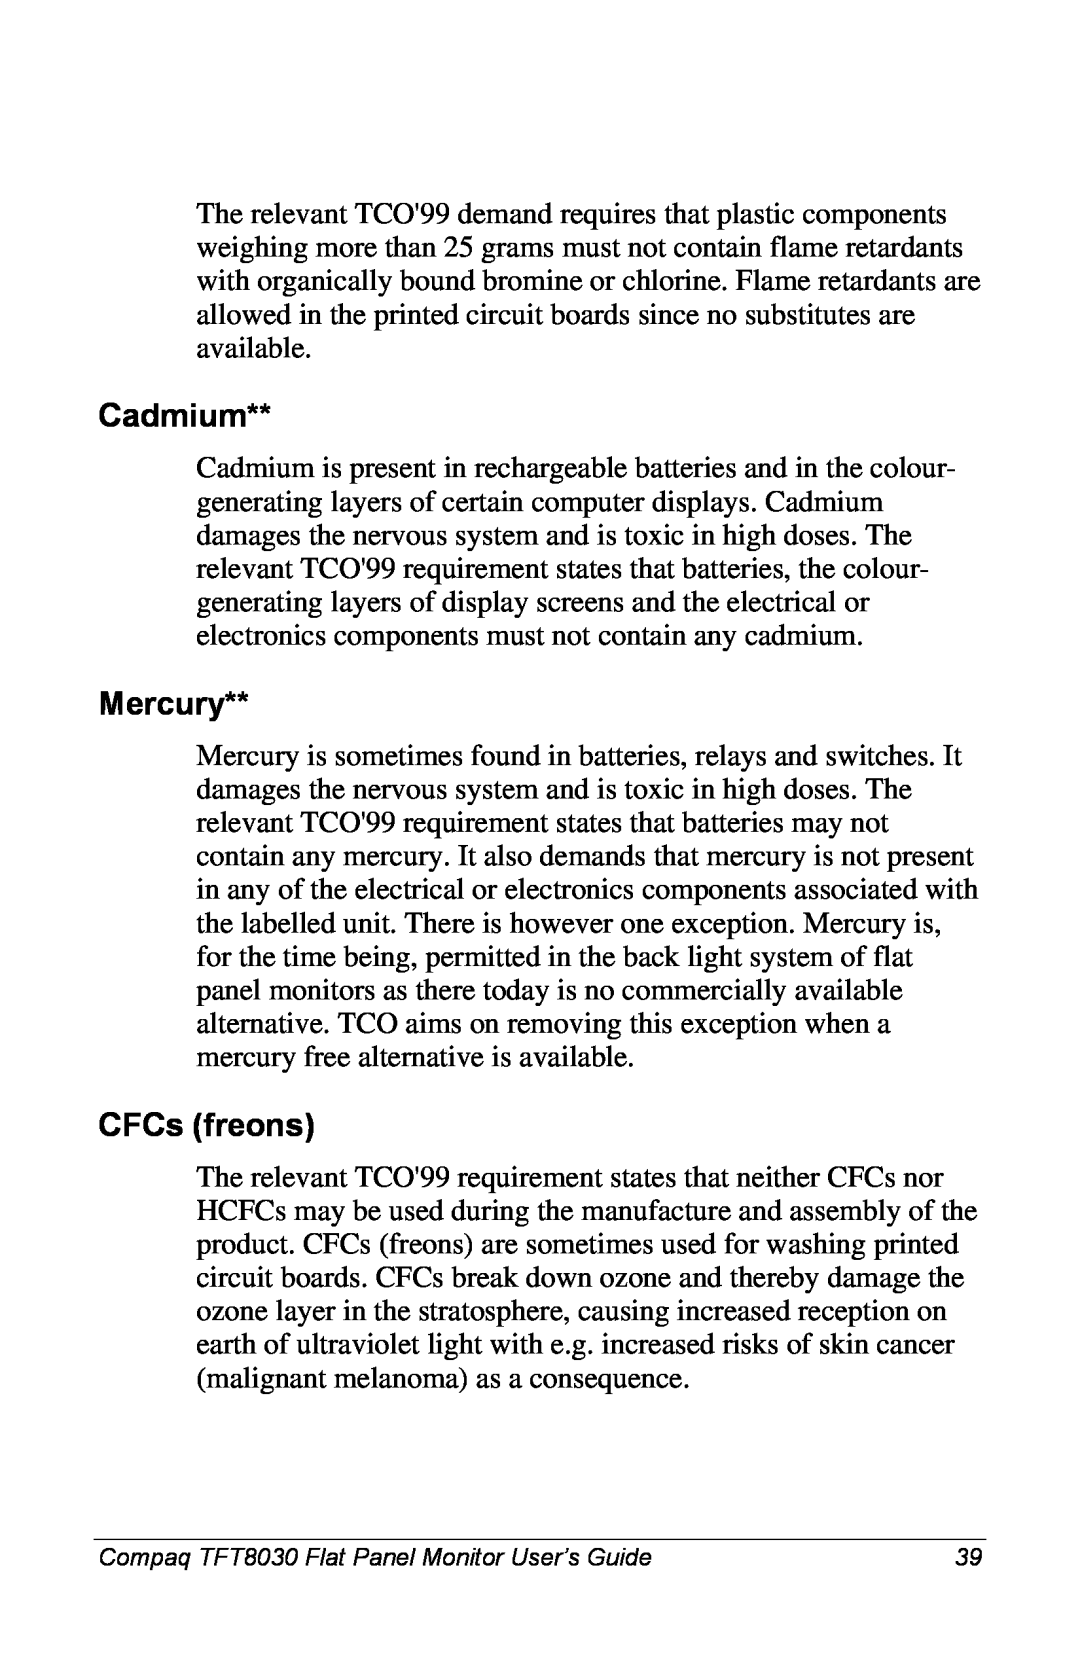 Compaq 8030 manual Cadmium, Mercury, CFCs freons 